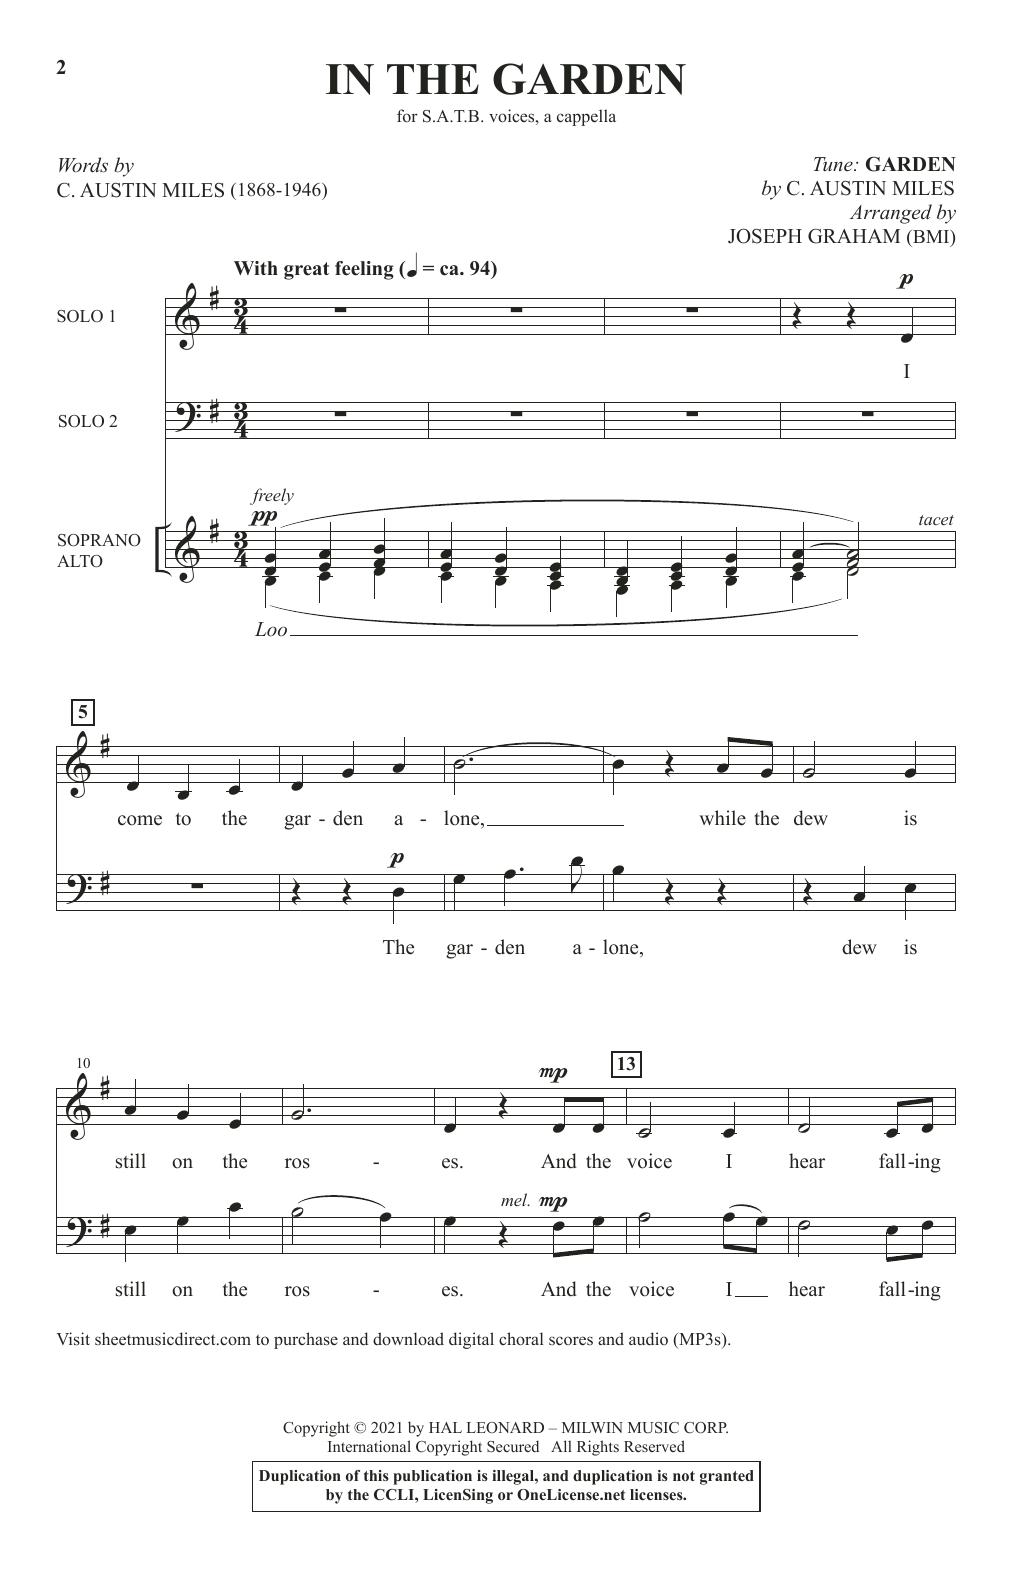 C. Austin Miles In The Garden (arr. Joseph Graham) Sheet Music Notes & Chords for SATB Choir - Download or Print PDF